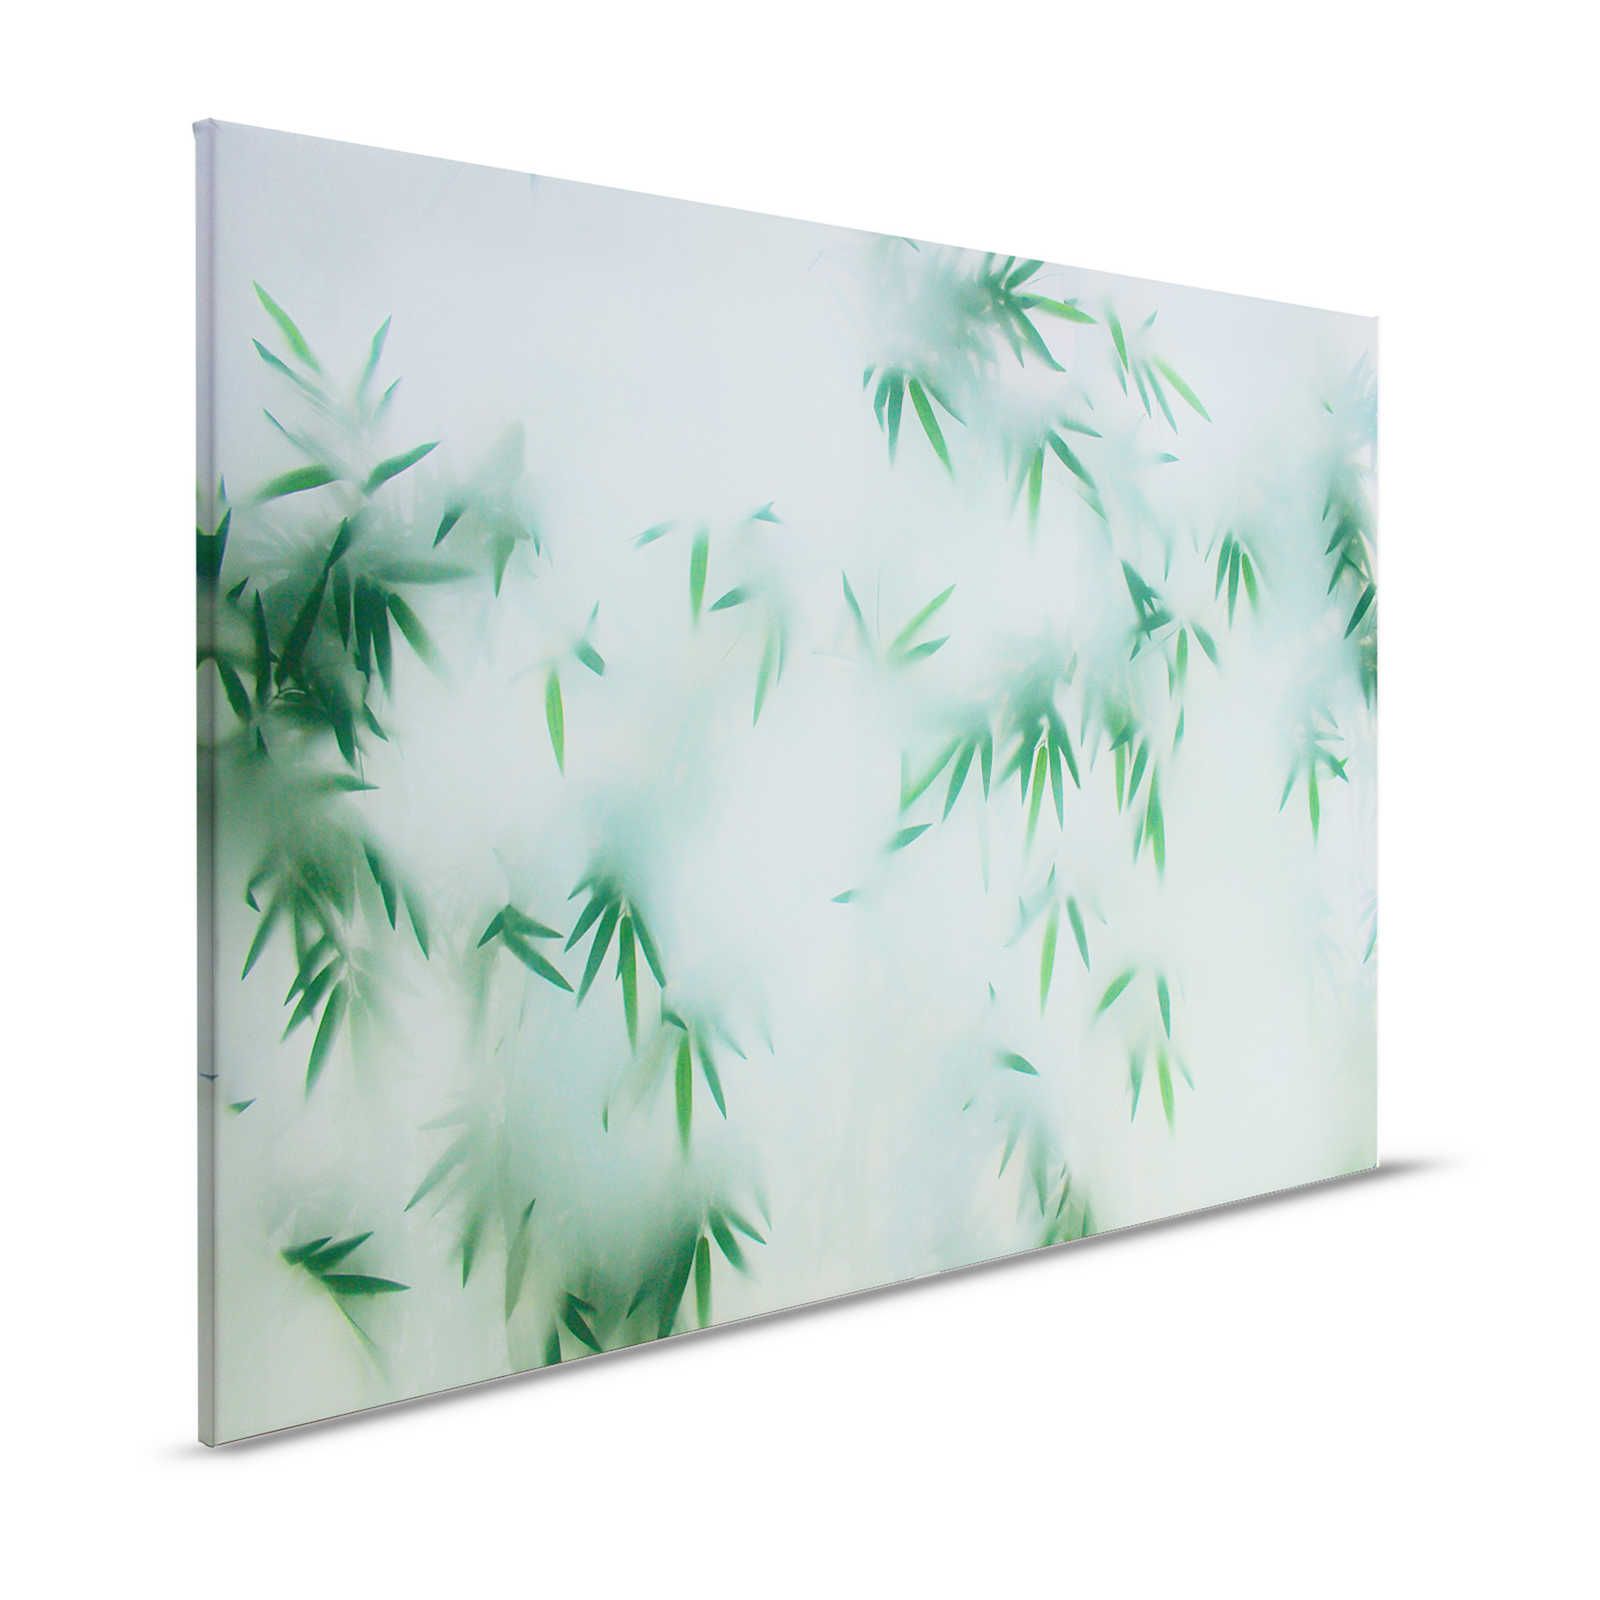 Panda Paradise 1 - Bamboe Canvas schilderij Groene bladeren in de mist - 1.20 m x 0.80 m
